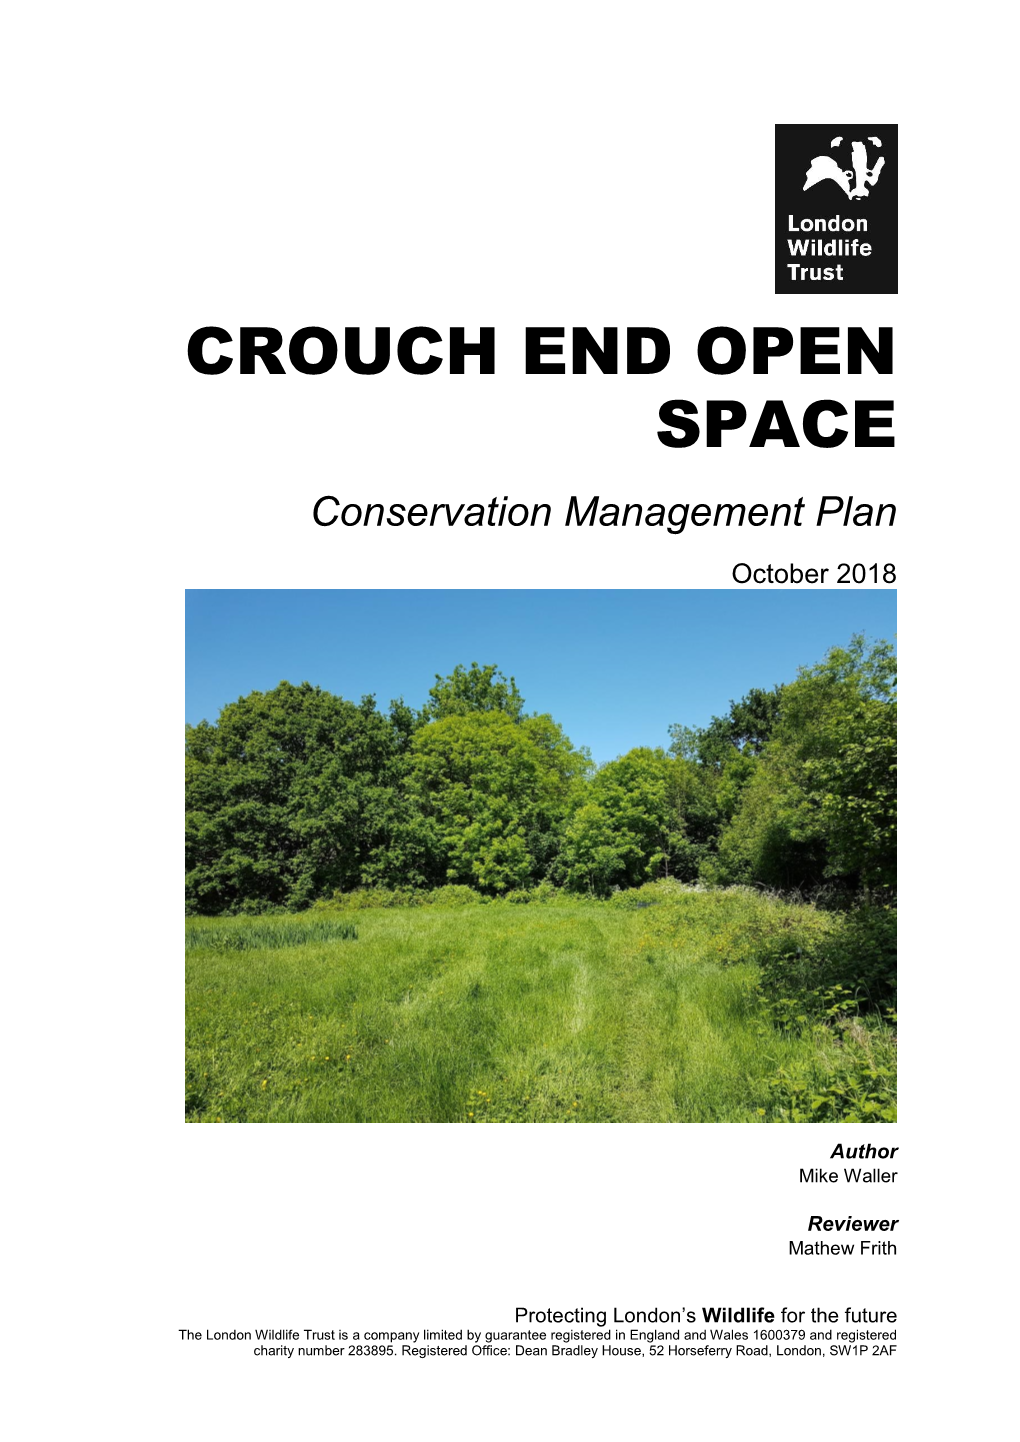 Conservation Management Plan